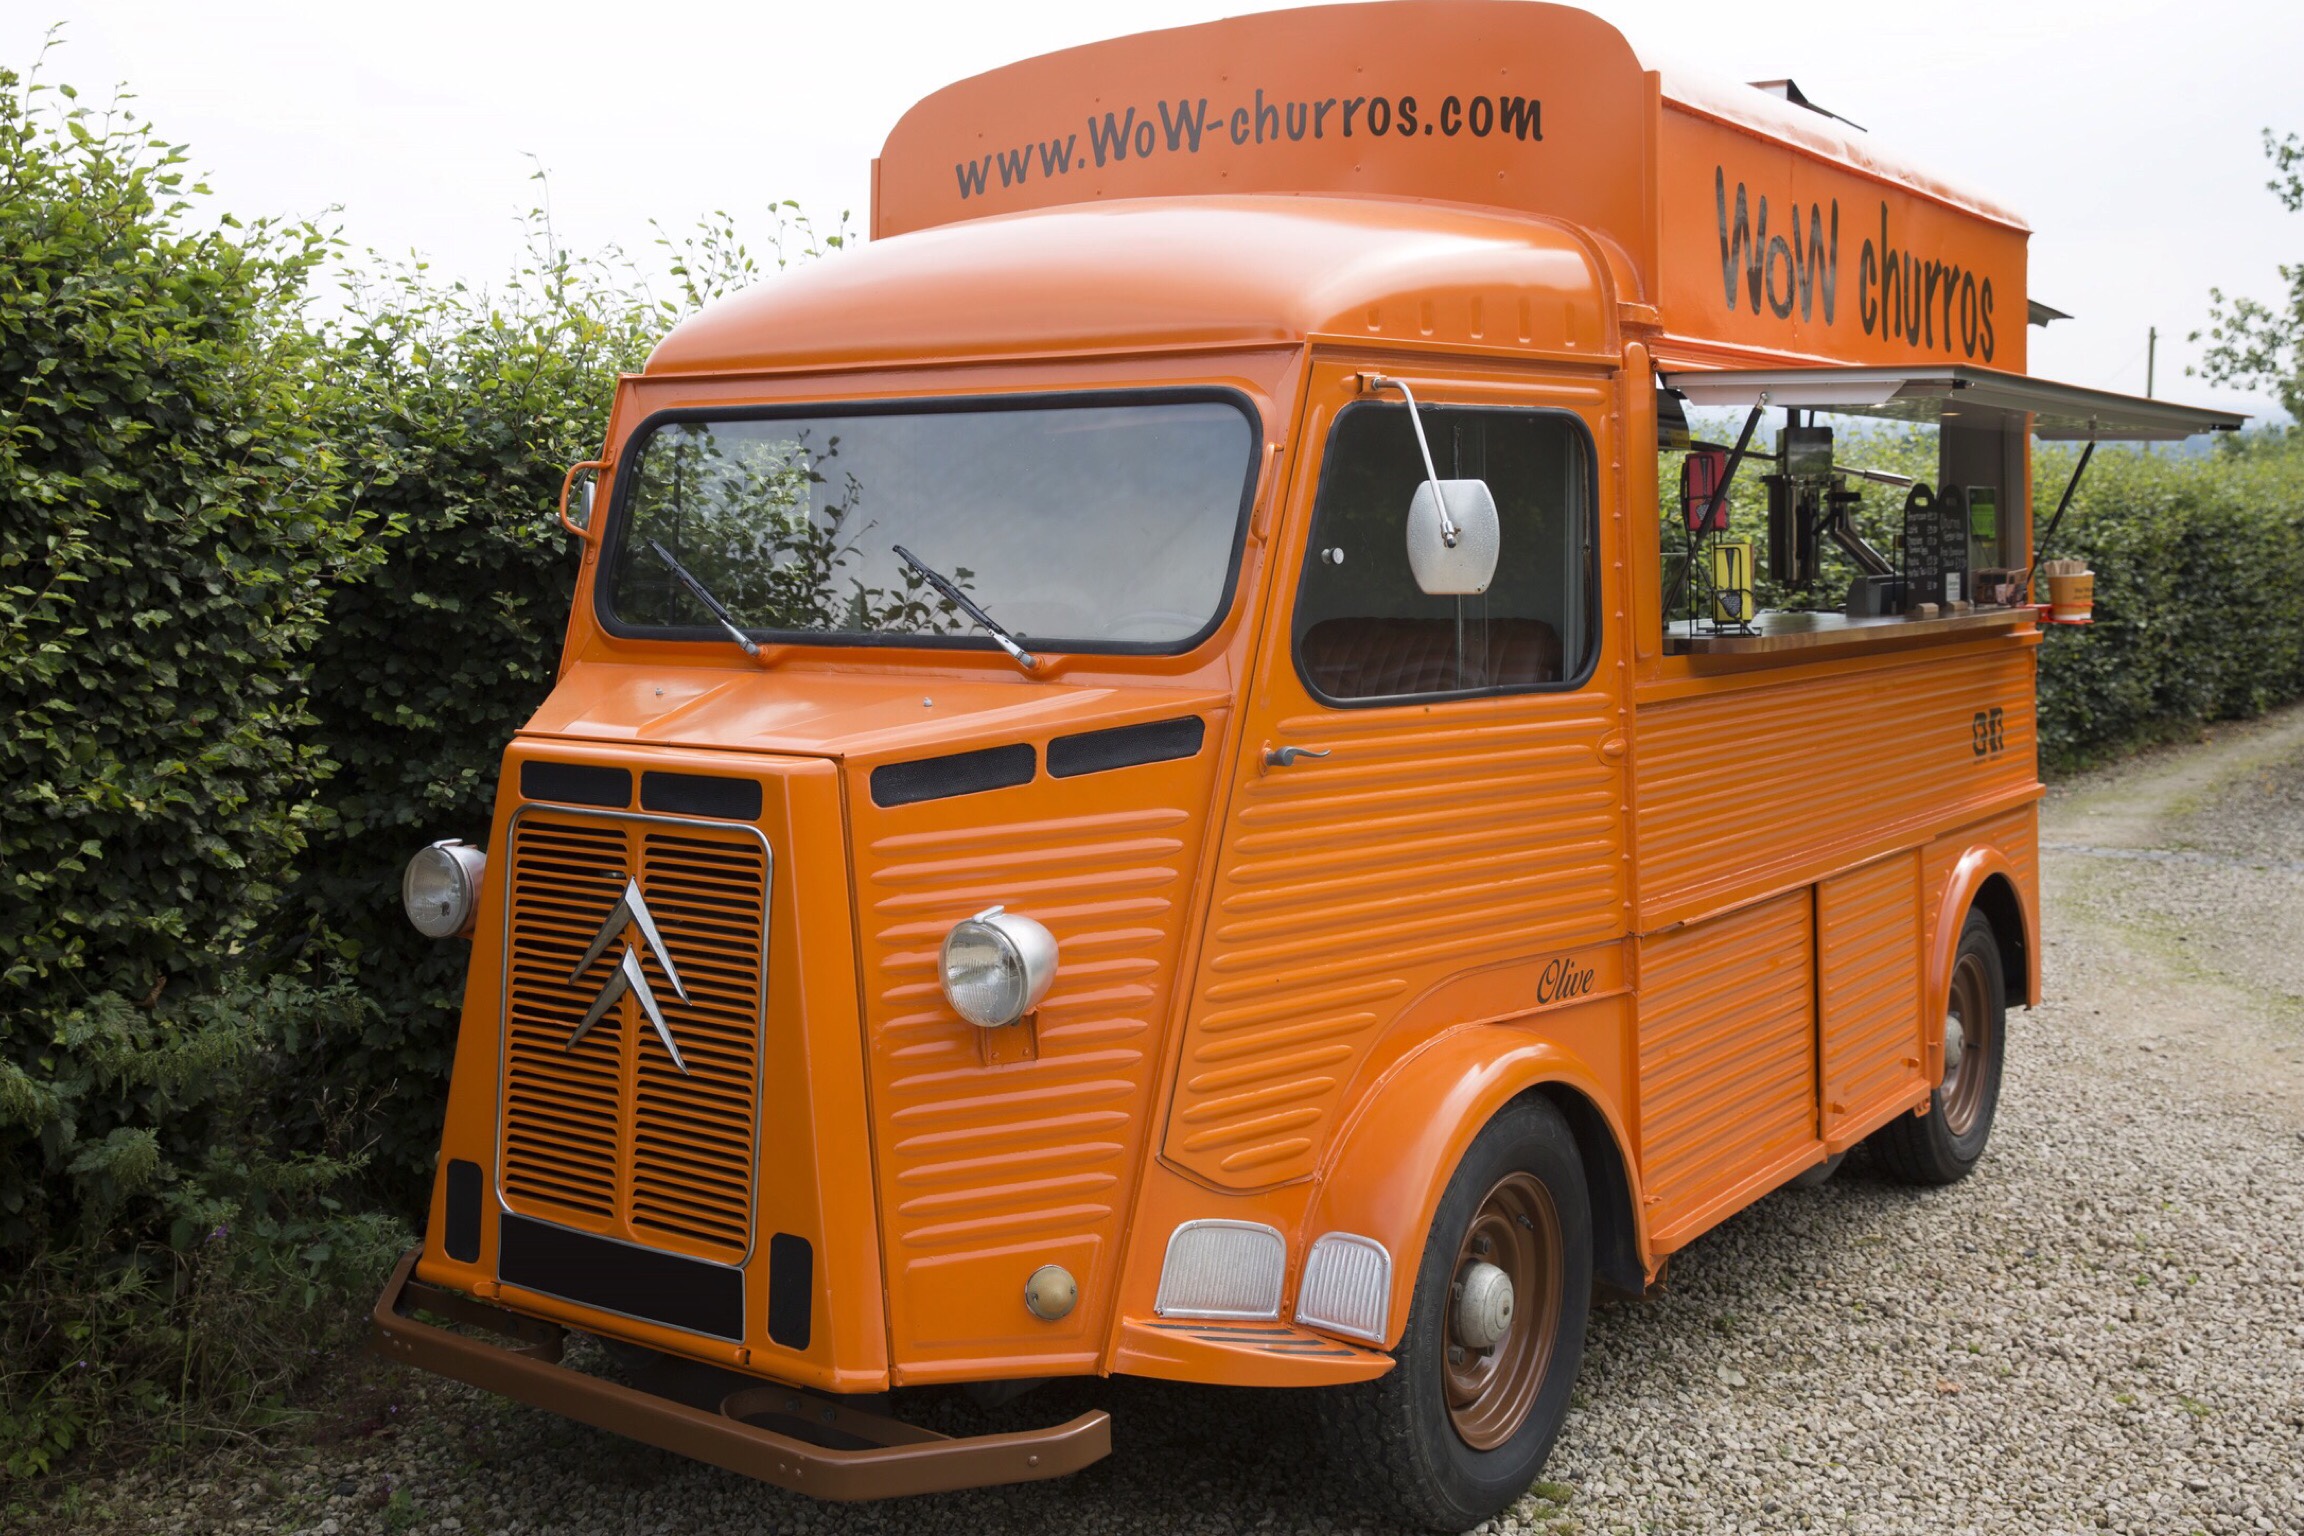 churros van for sale uk